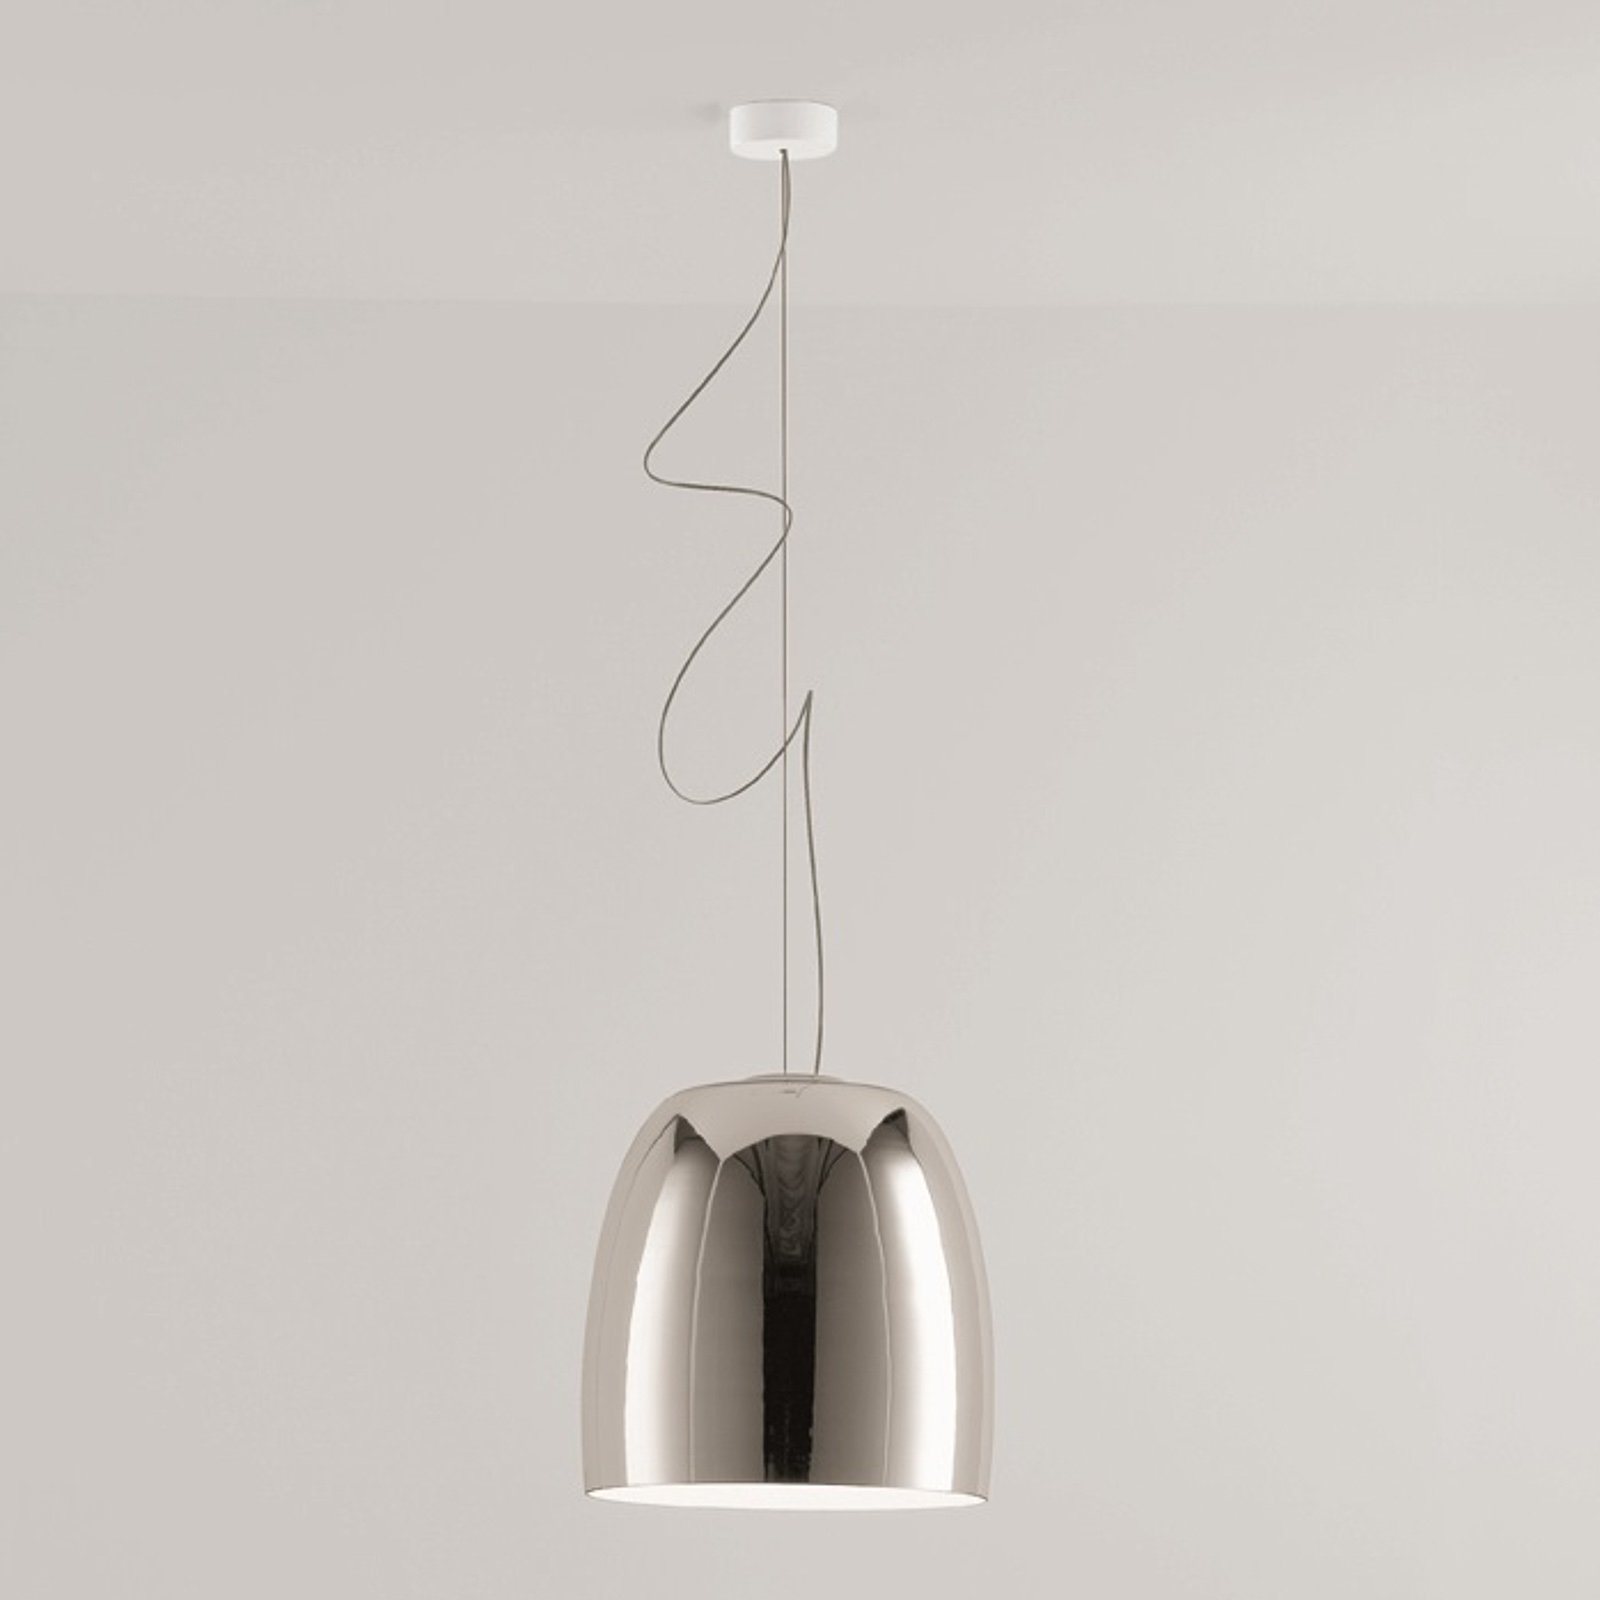 Prandina Notte S5 hanglamp, chroom glanzend/wit